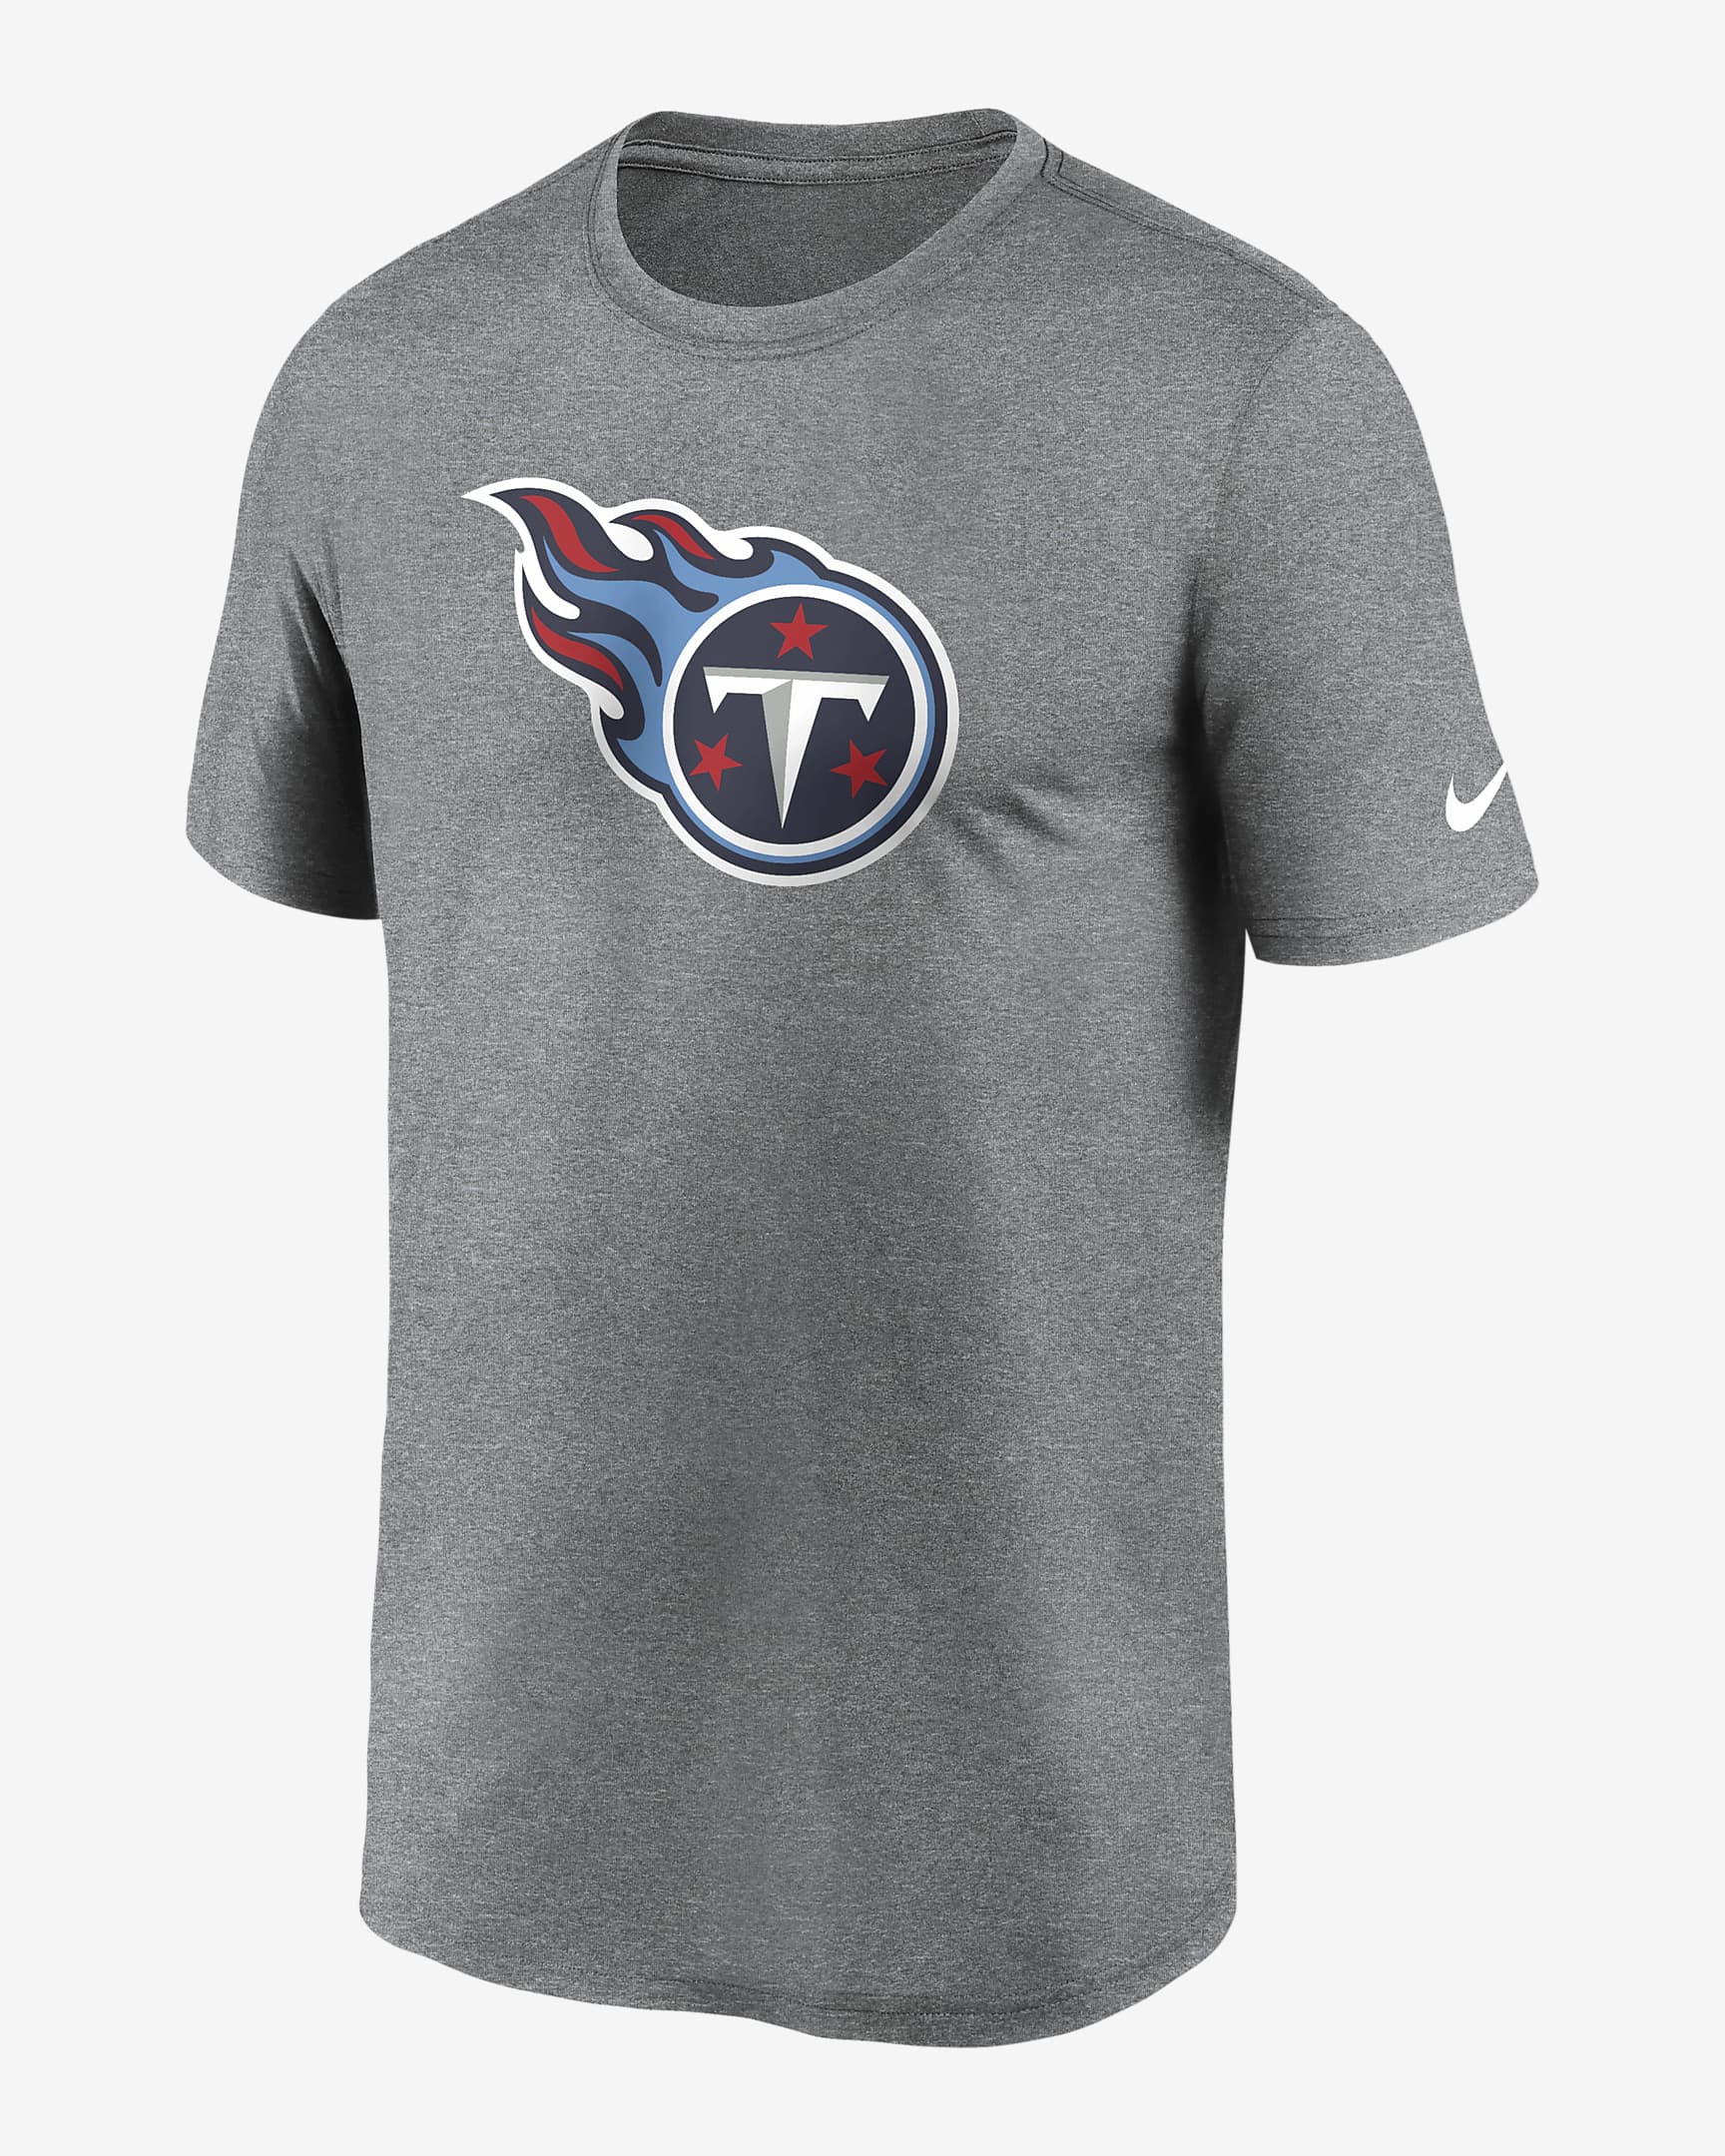 Nike Dri-FIT Logo Legend (NFL Tennessee Titans) Men's T-Shirt. Nike.com